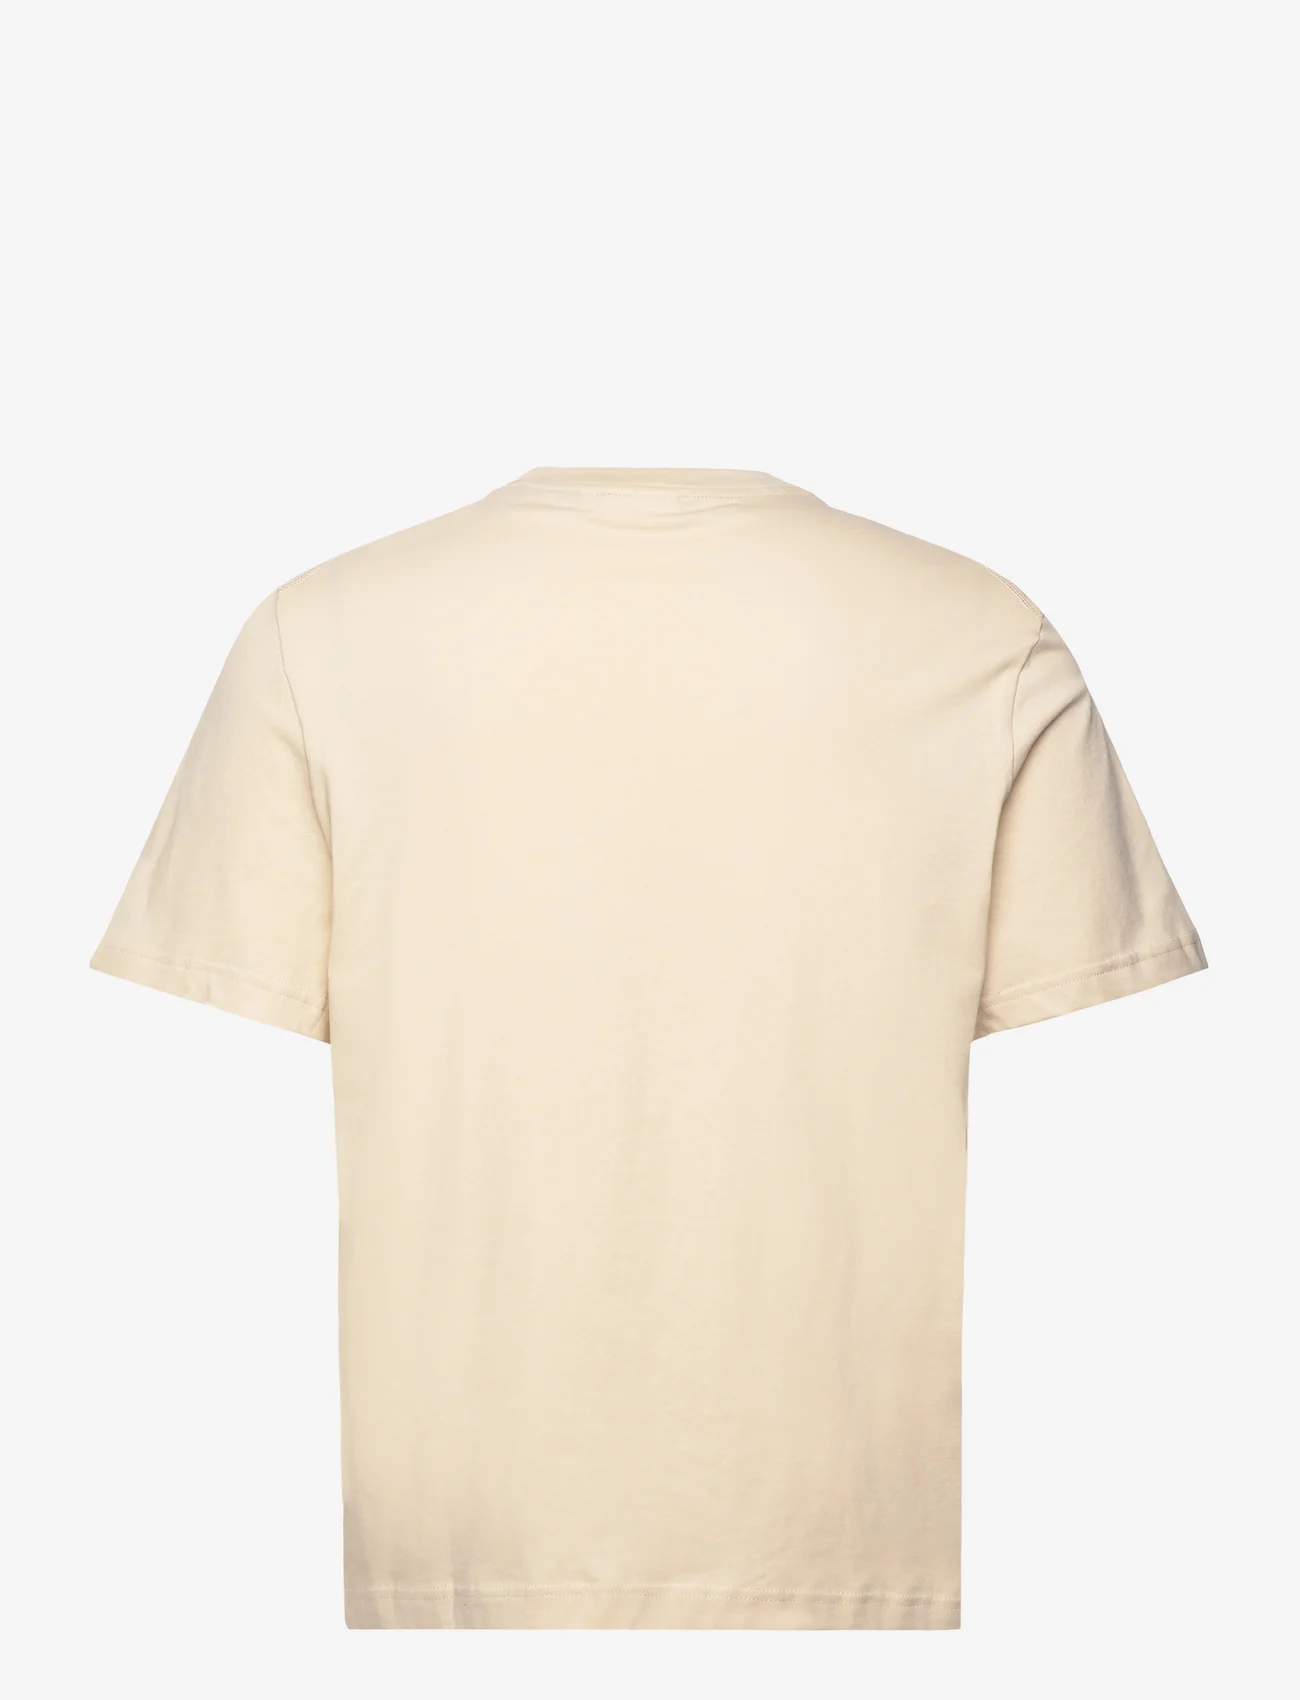 Calvin Klein - PHOTO PRINT T-SHIRT - kortärmade t-shirts - fog - 1